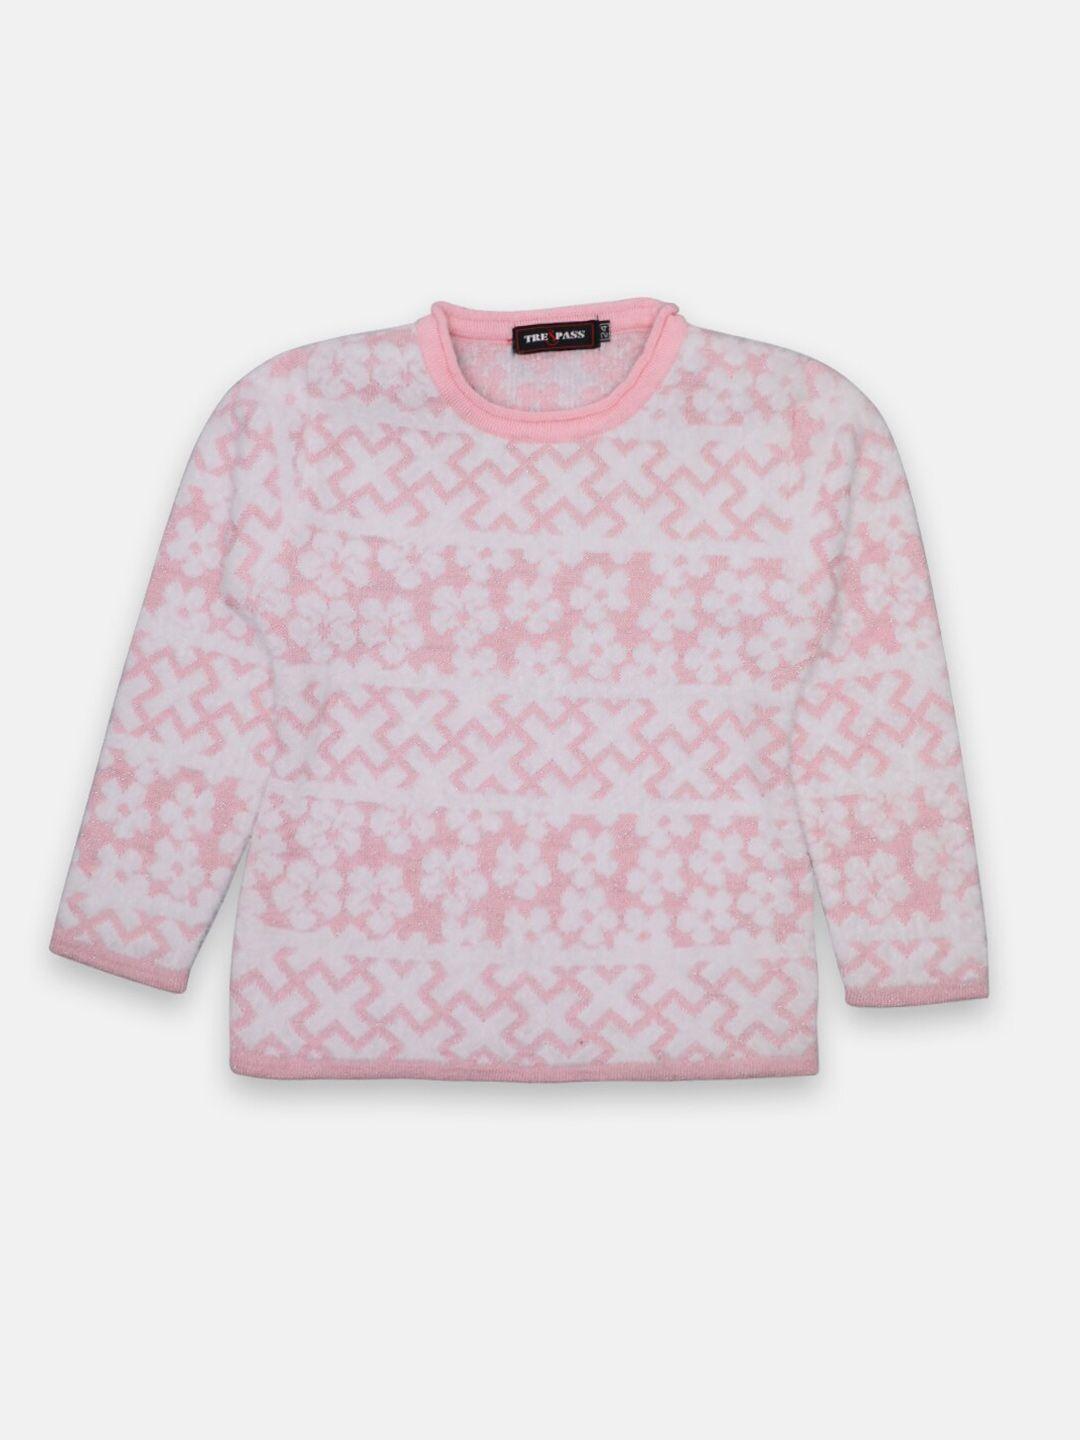 tre&pass girls pink and white woolen self design winter pullover